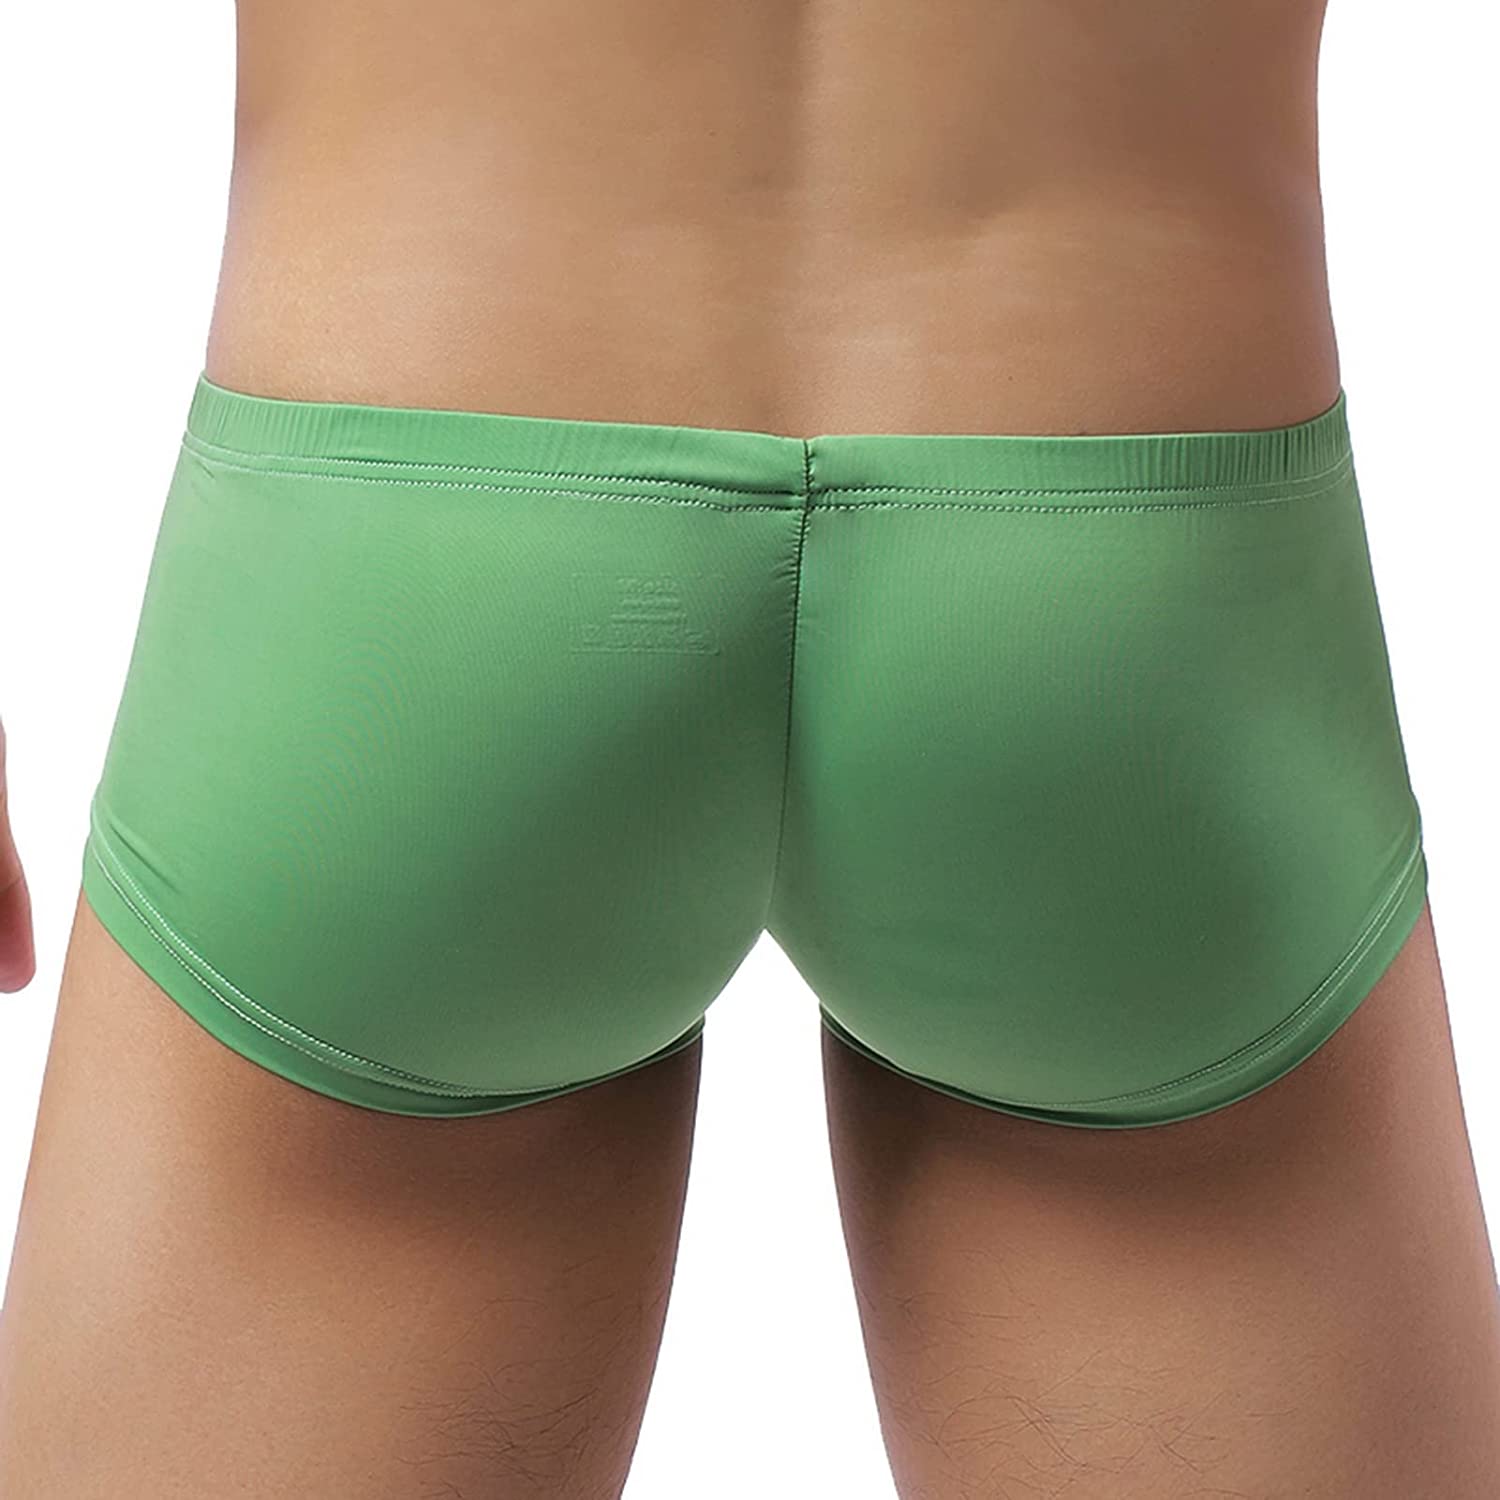 Green Ice Underwear WholeSale - Price List, Bulk Buy at